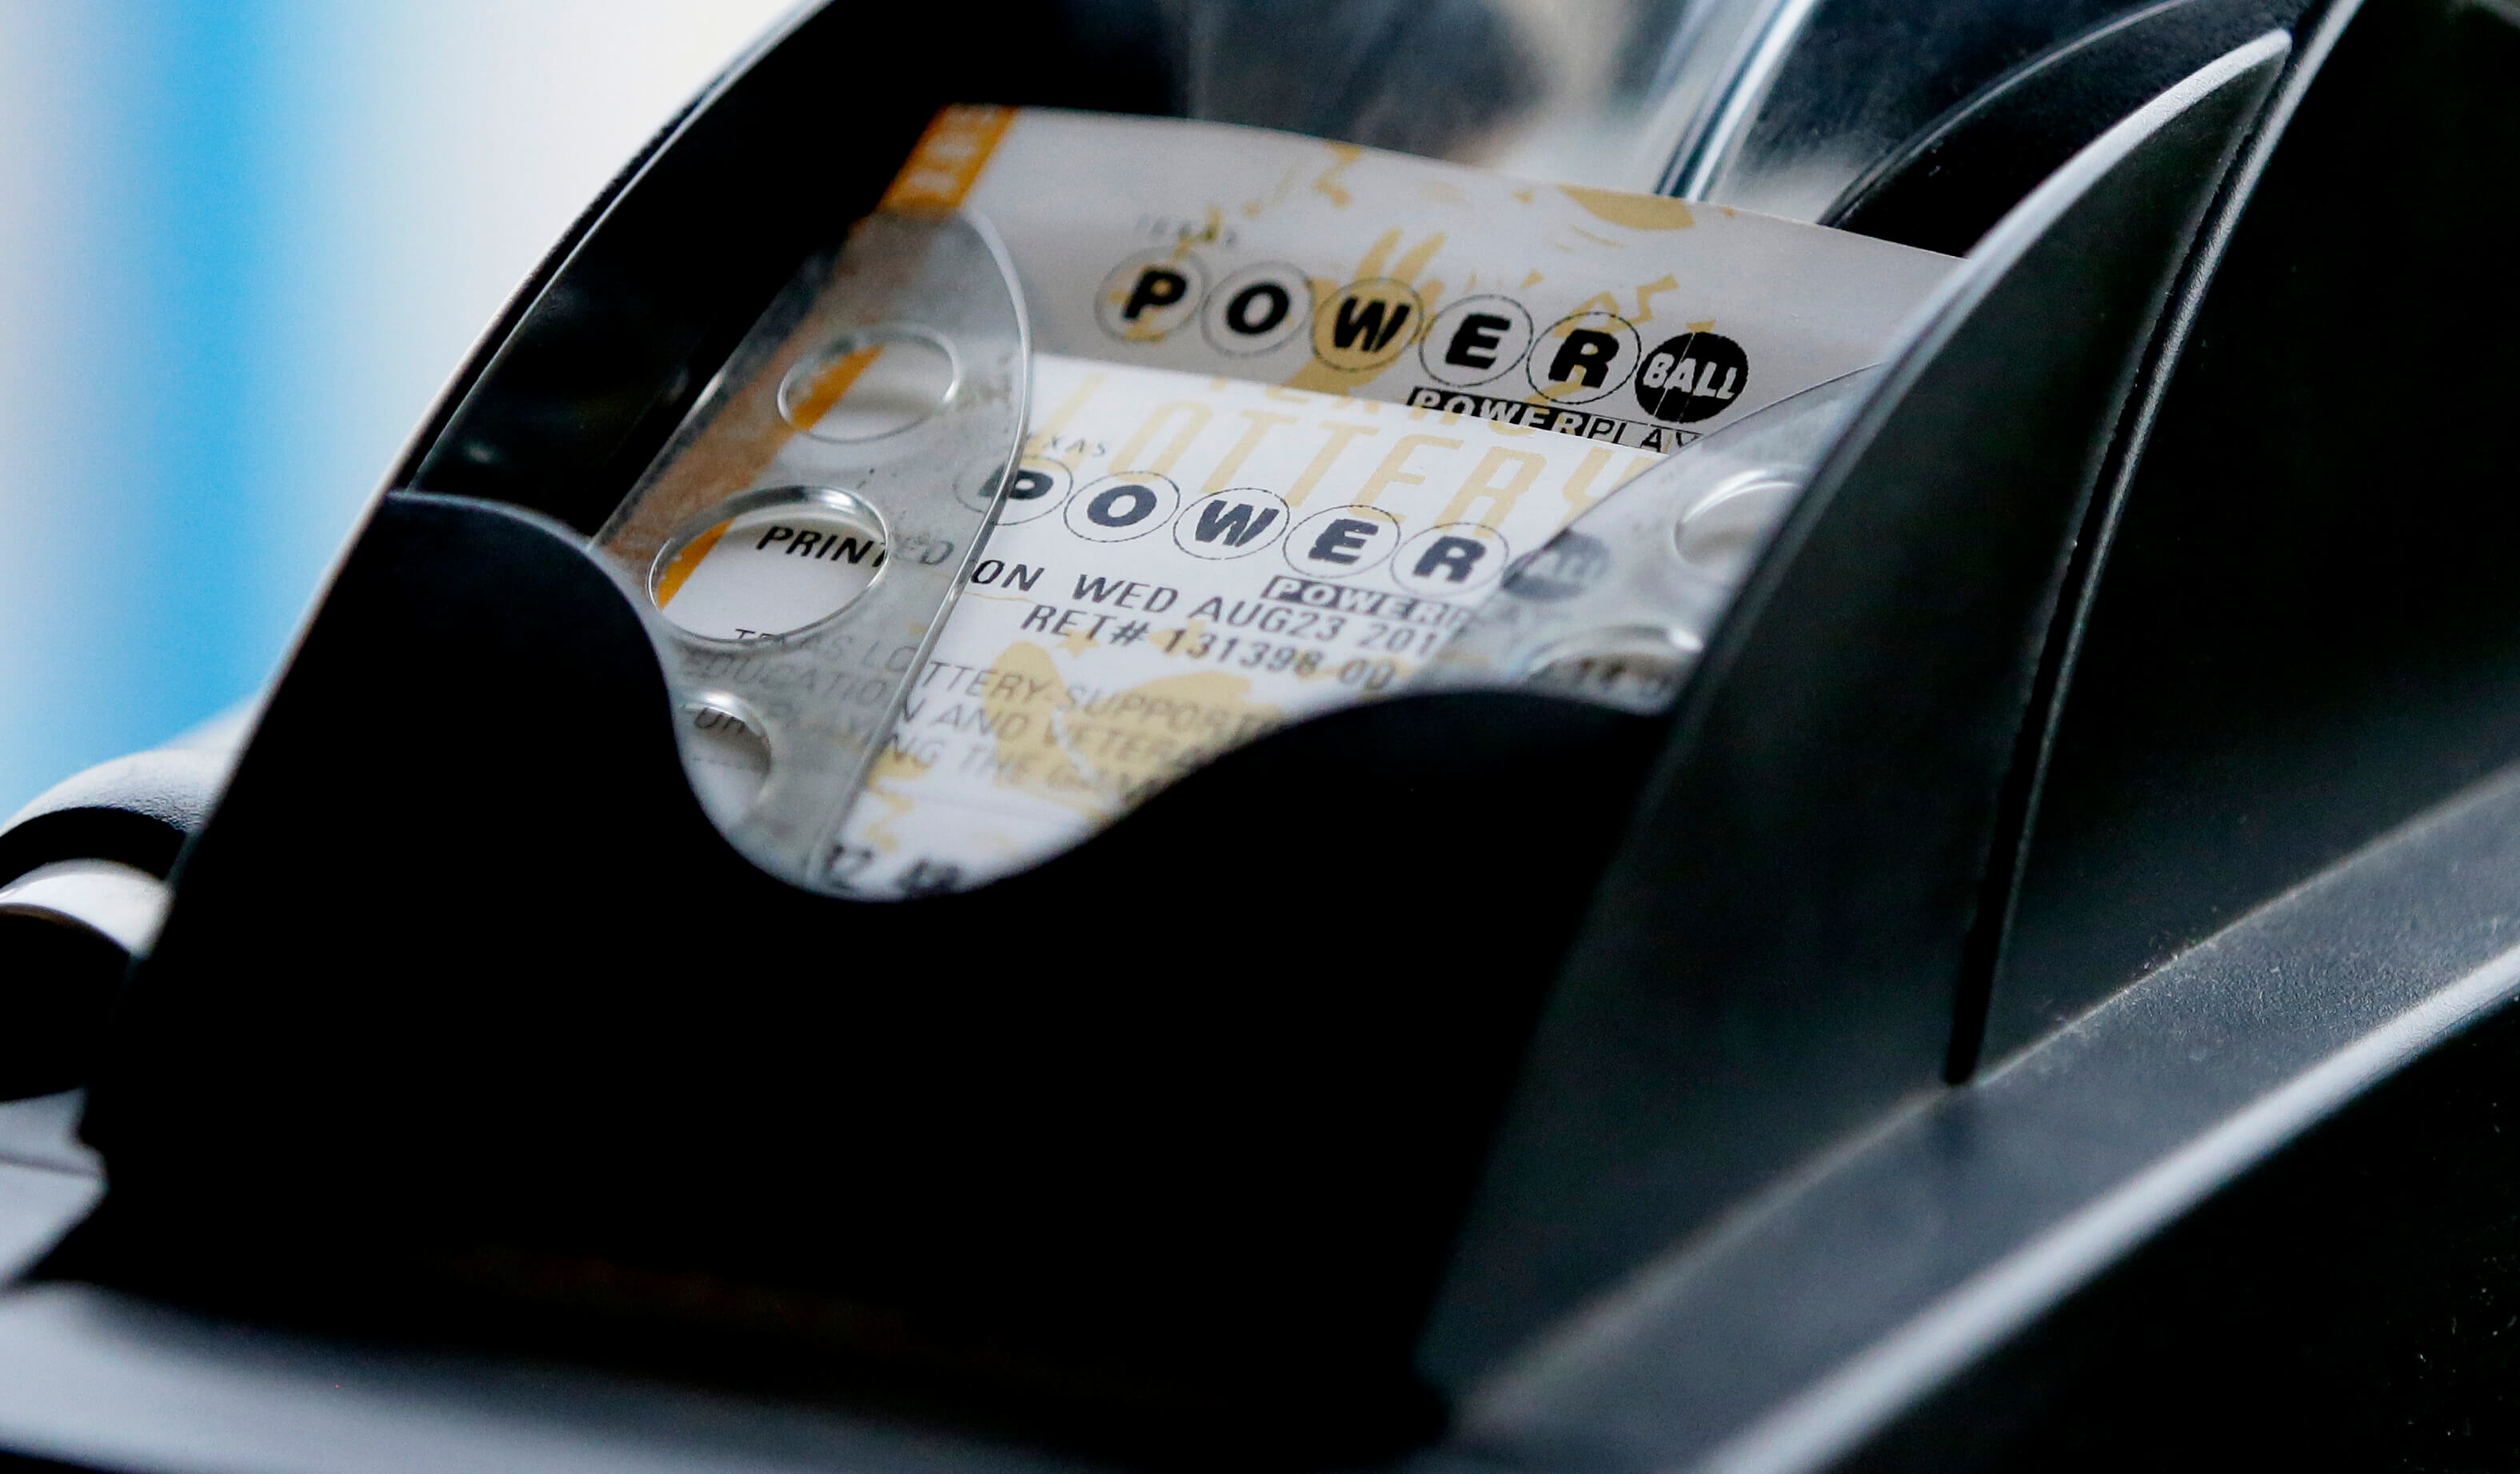 Boleto de Powerball, lotería estadounidense con una bolsa de 758 mdd